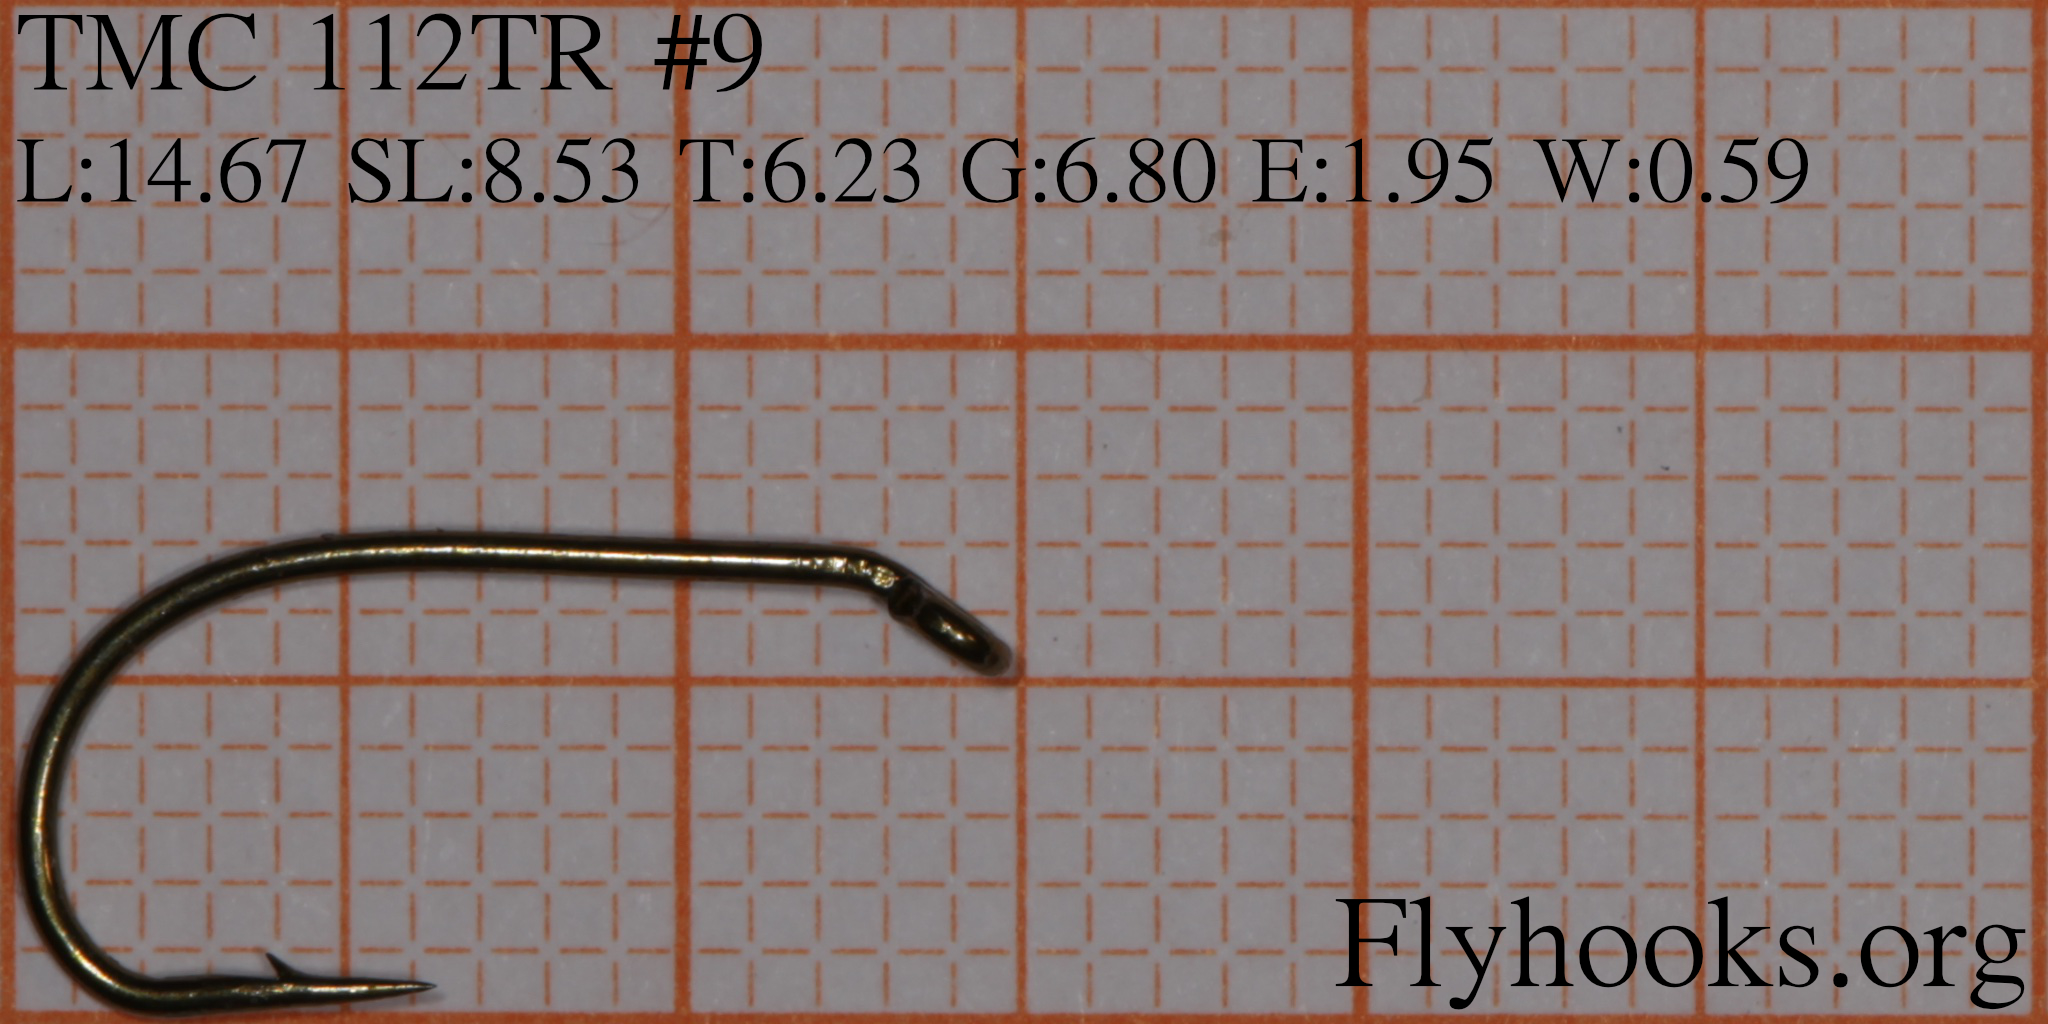 Tiemco 800S Fly Hooks | Aussie Angler